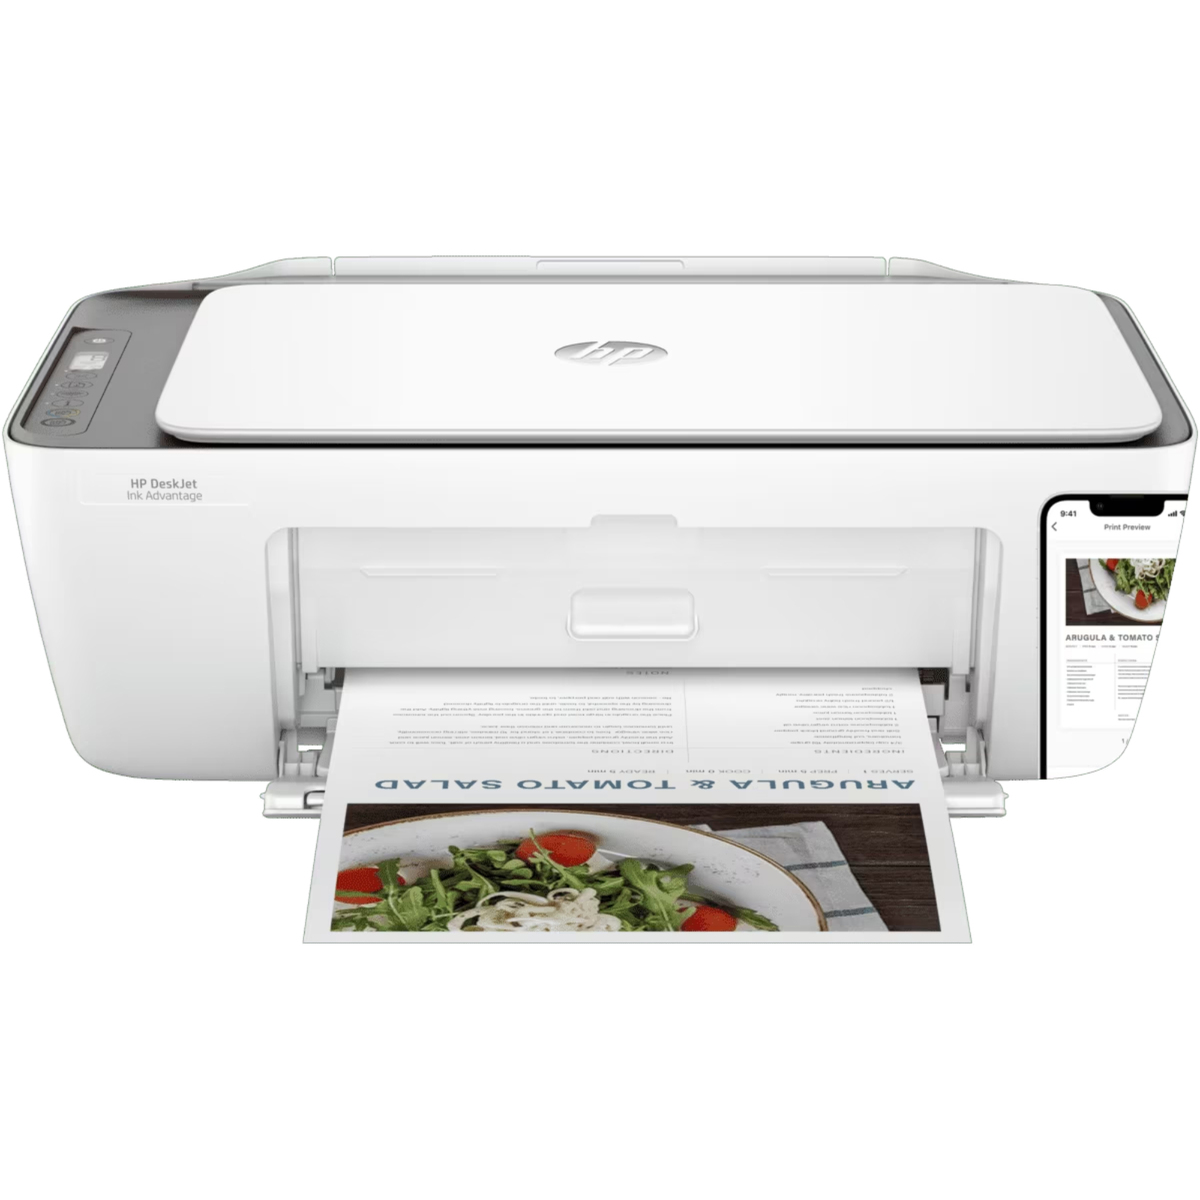 HP DeskJet Ink Advantage All-in-One Printer, 2876